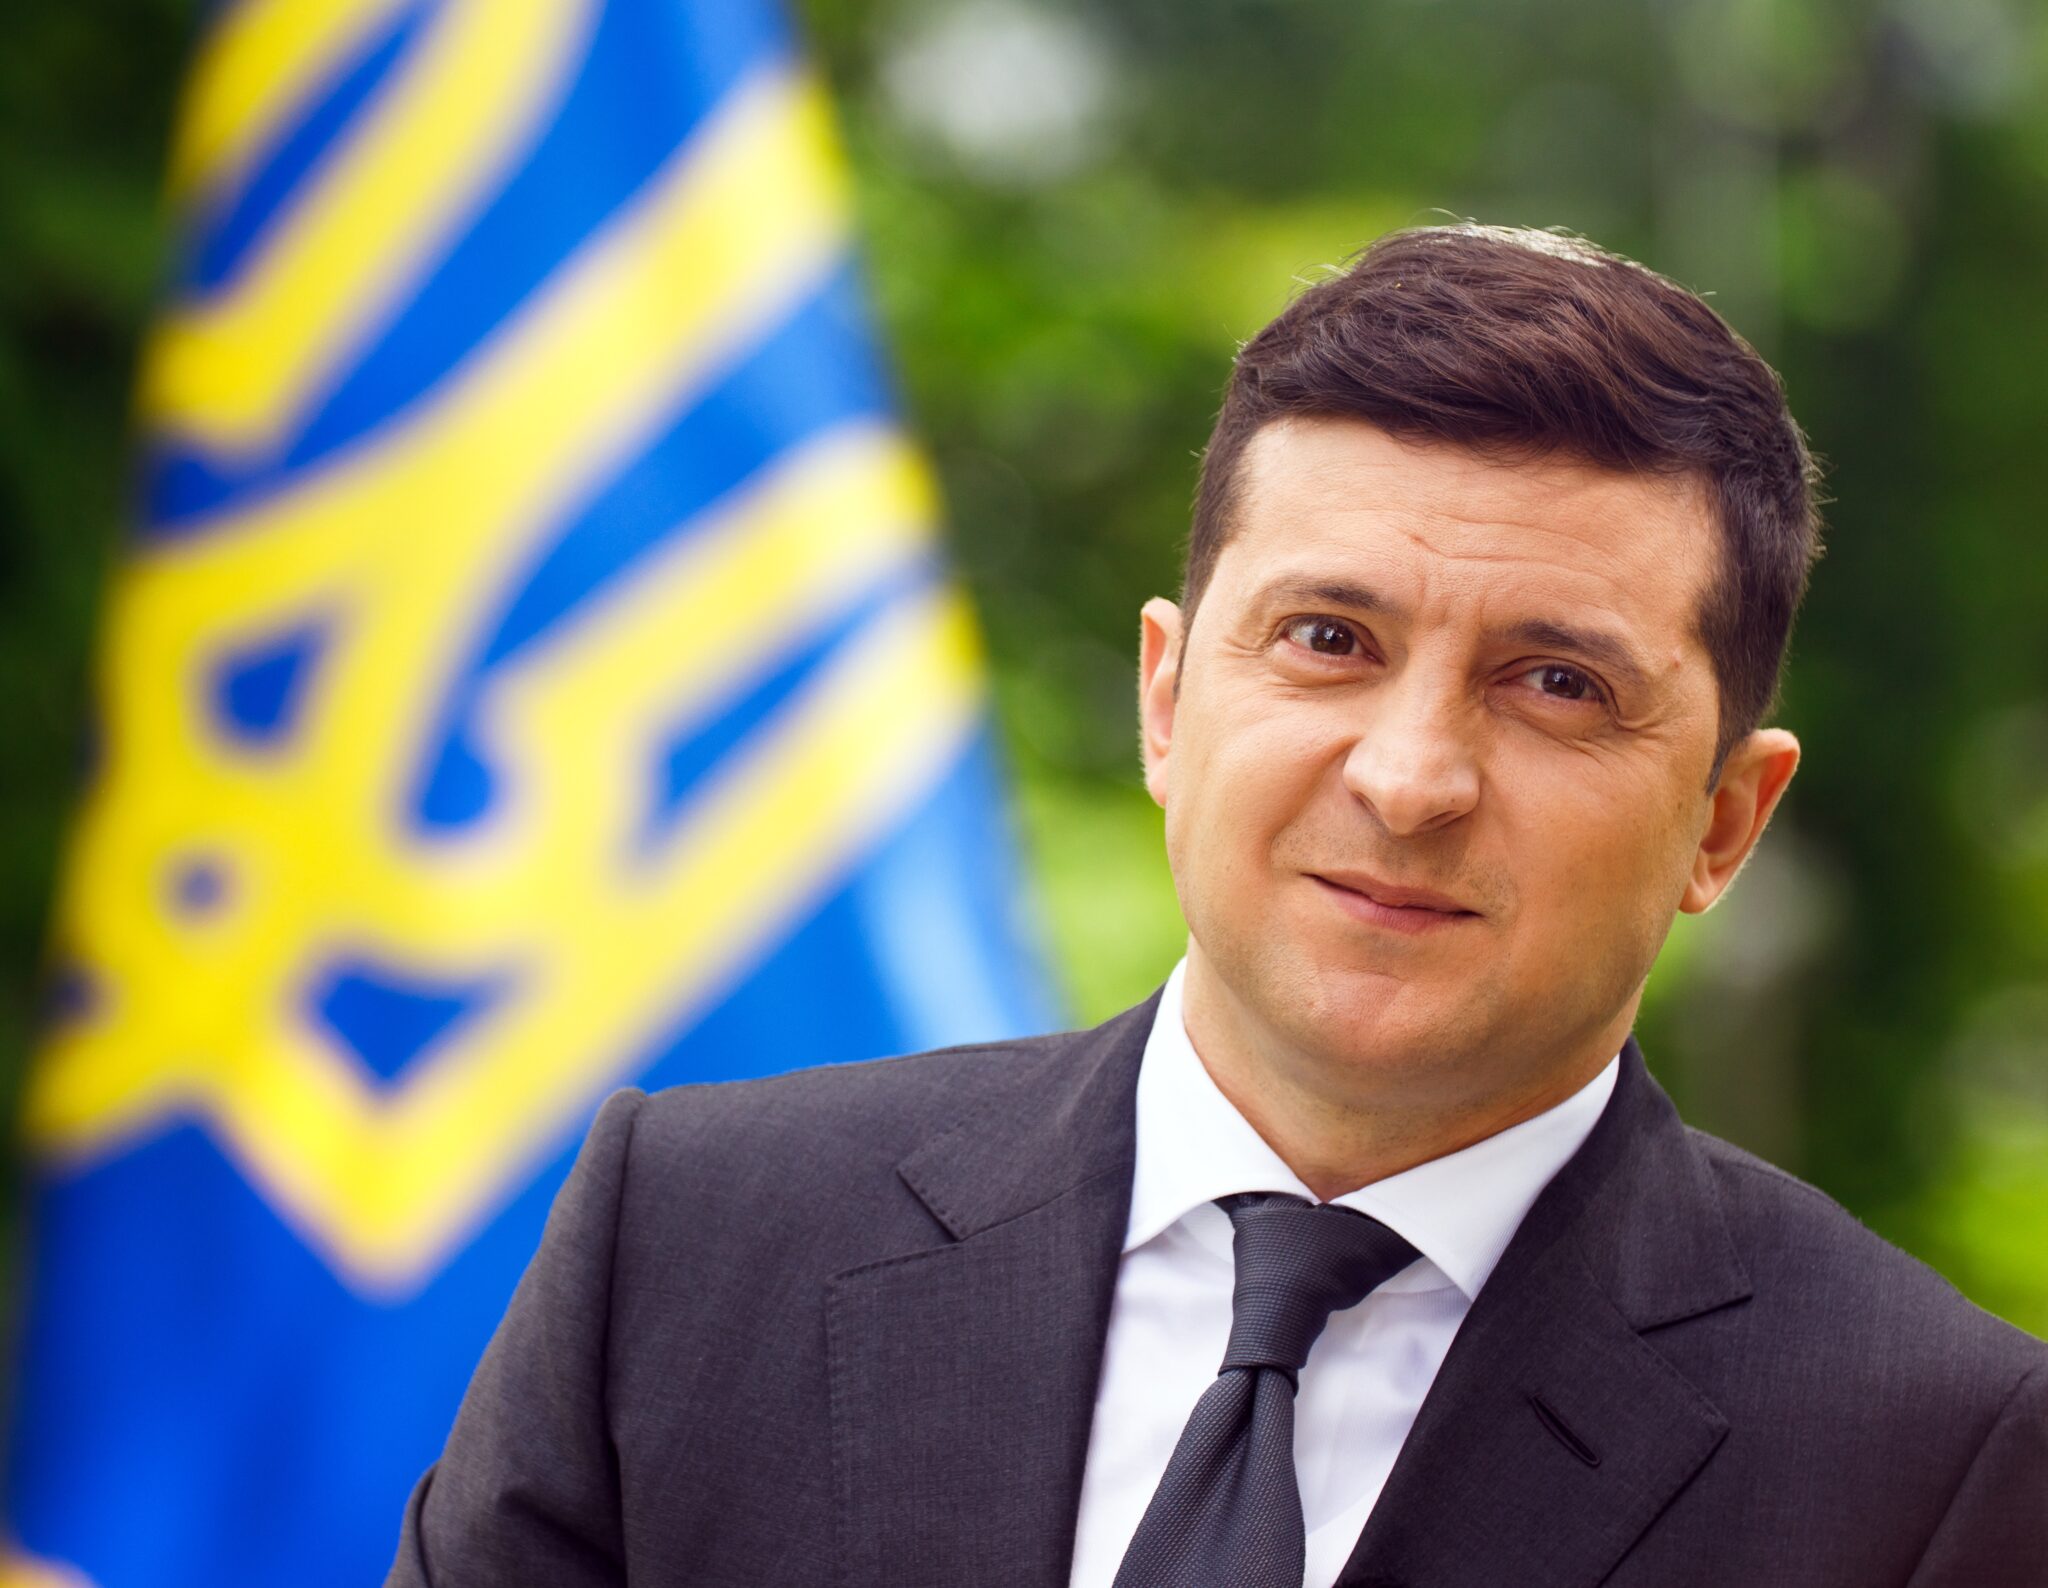 KIEV, UKRAINE - MAY 20, 2020: Press conference of President of Ukraine Volodymyr Zelensky